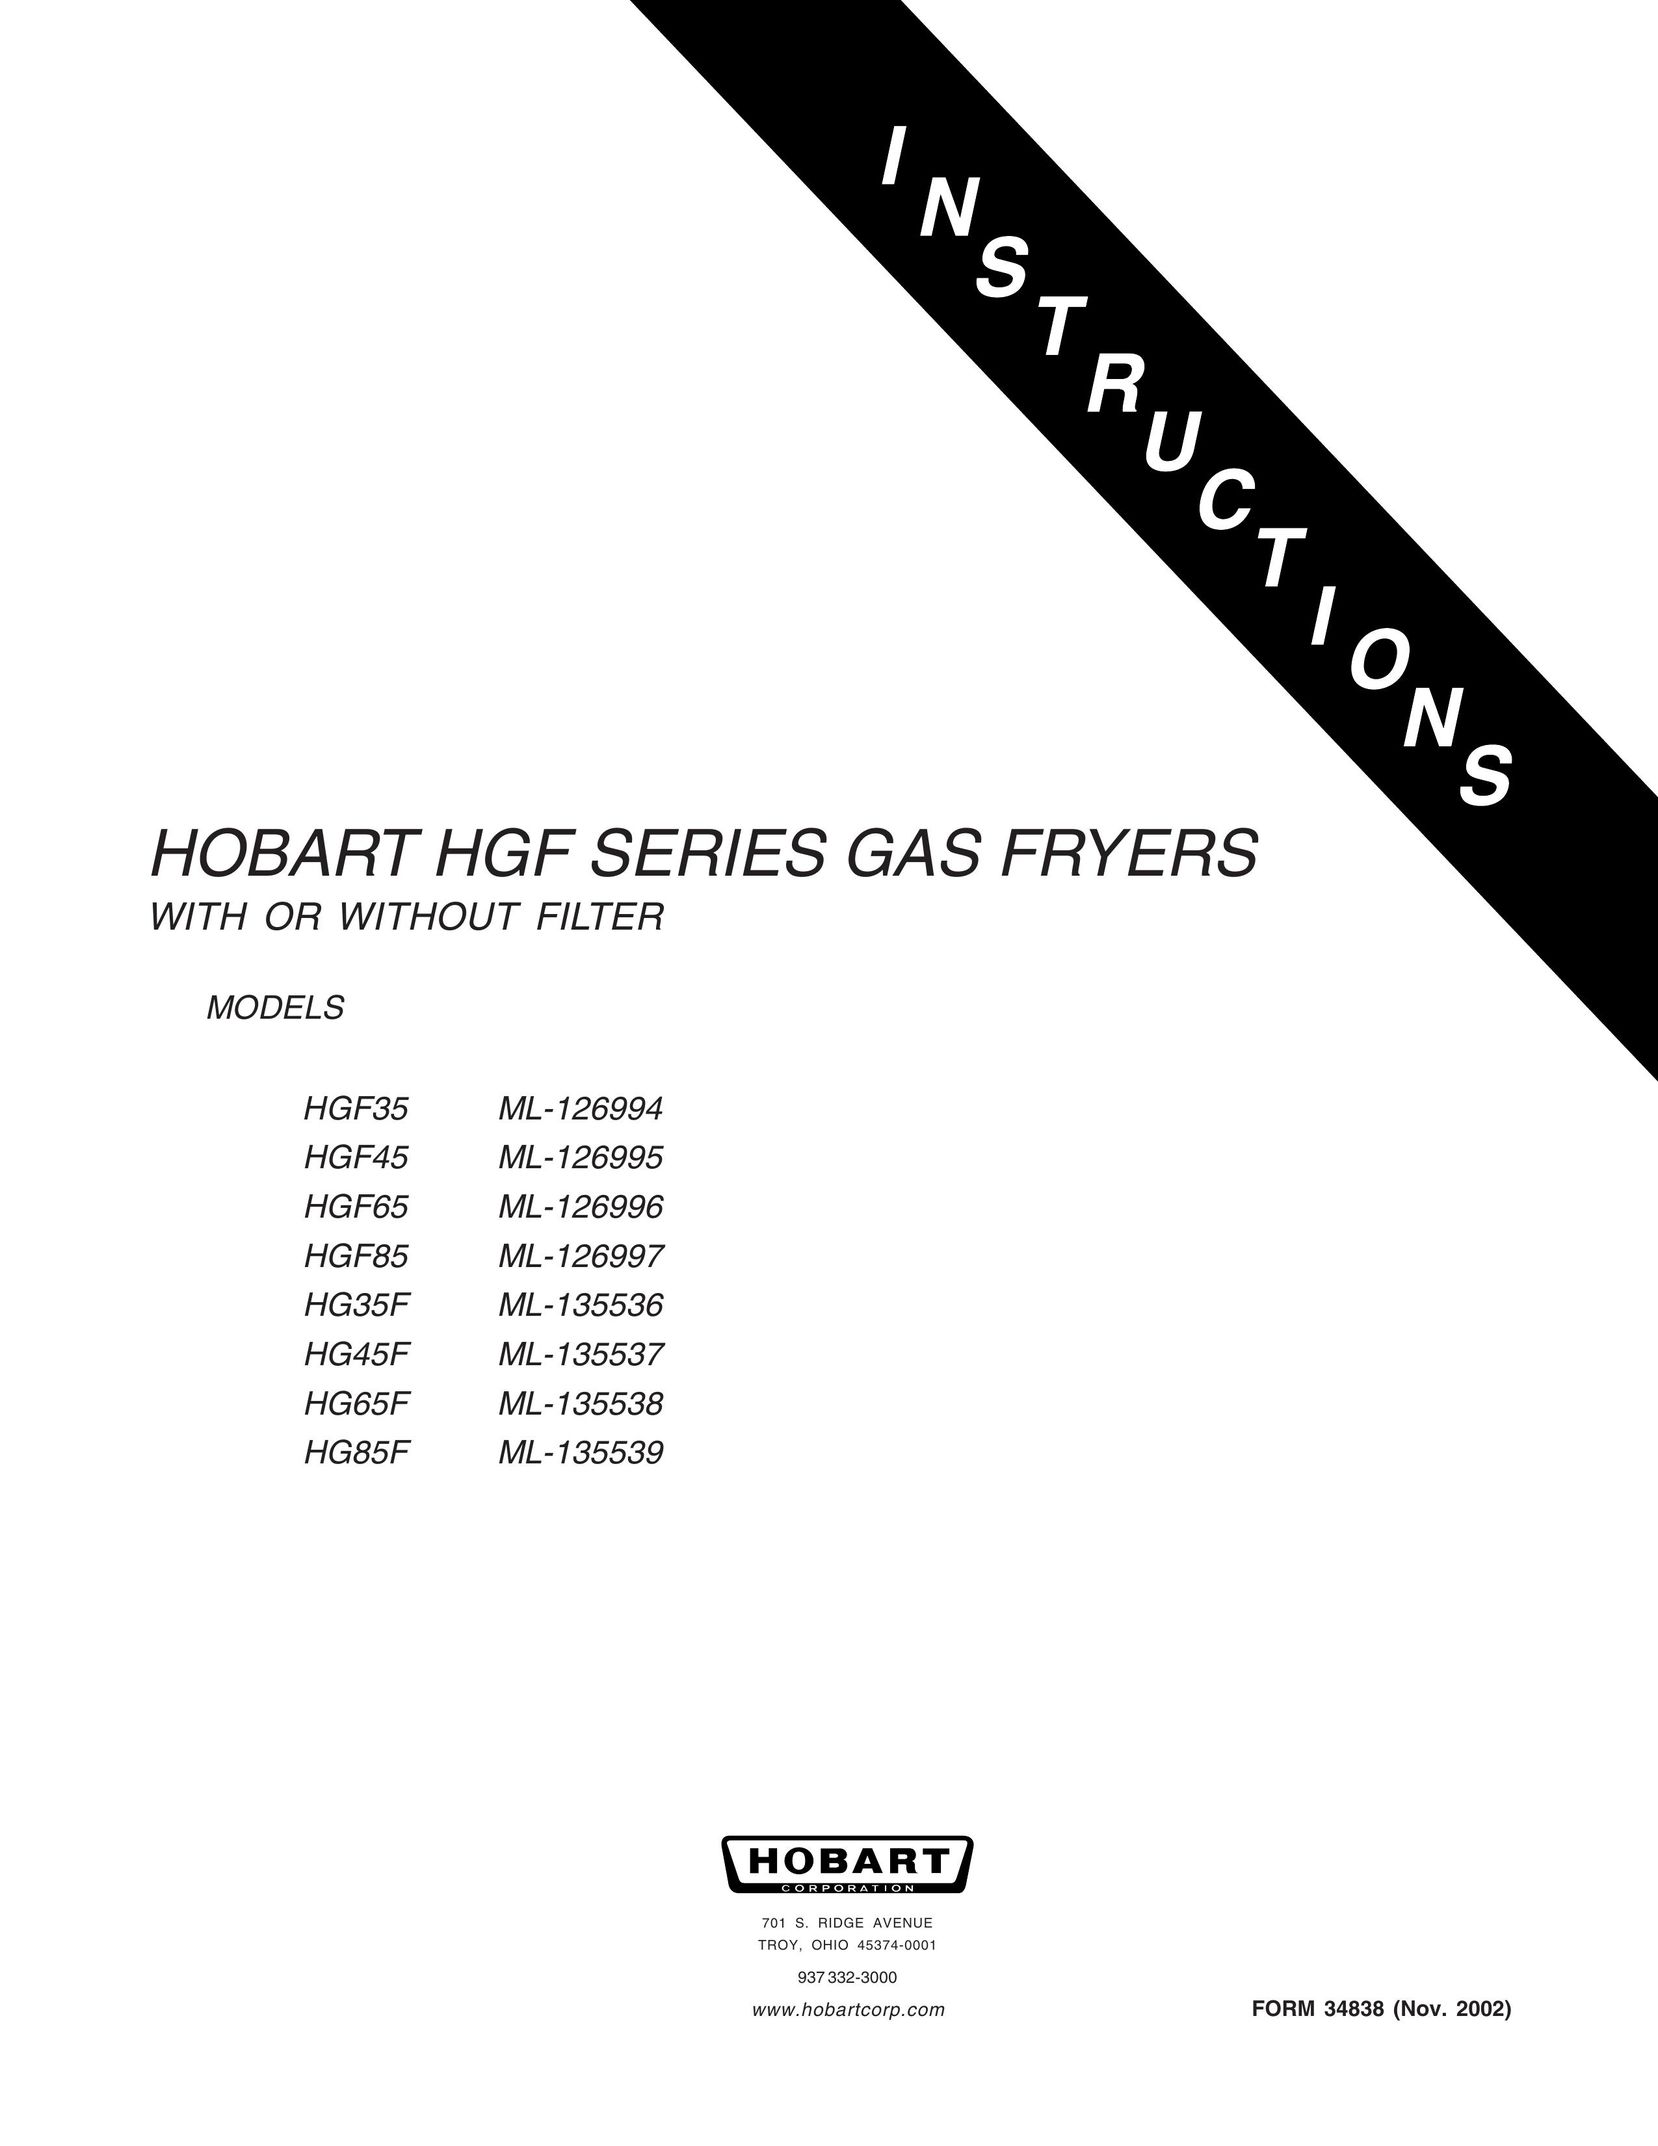 Hobart HG85F ML-135539 Fryer User Manual